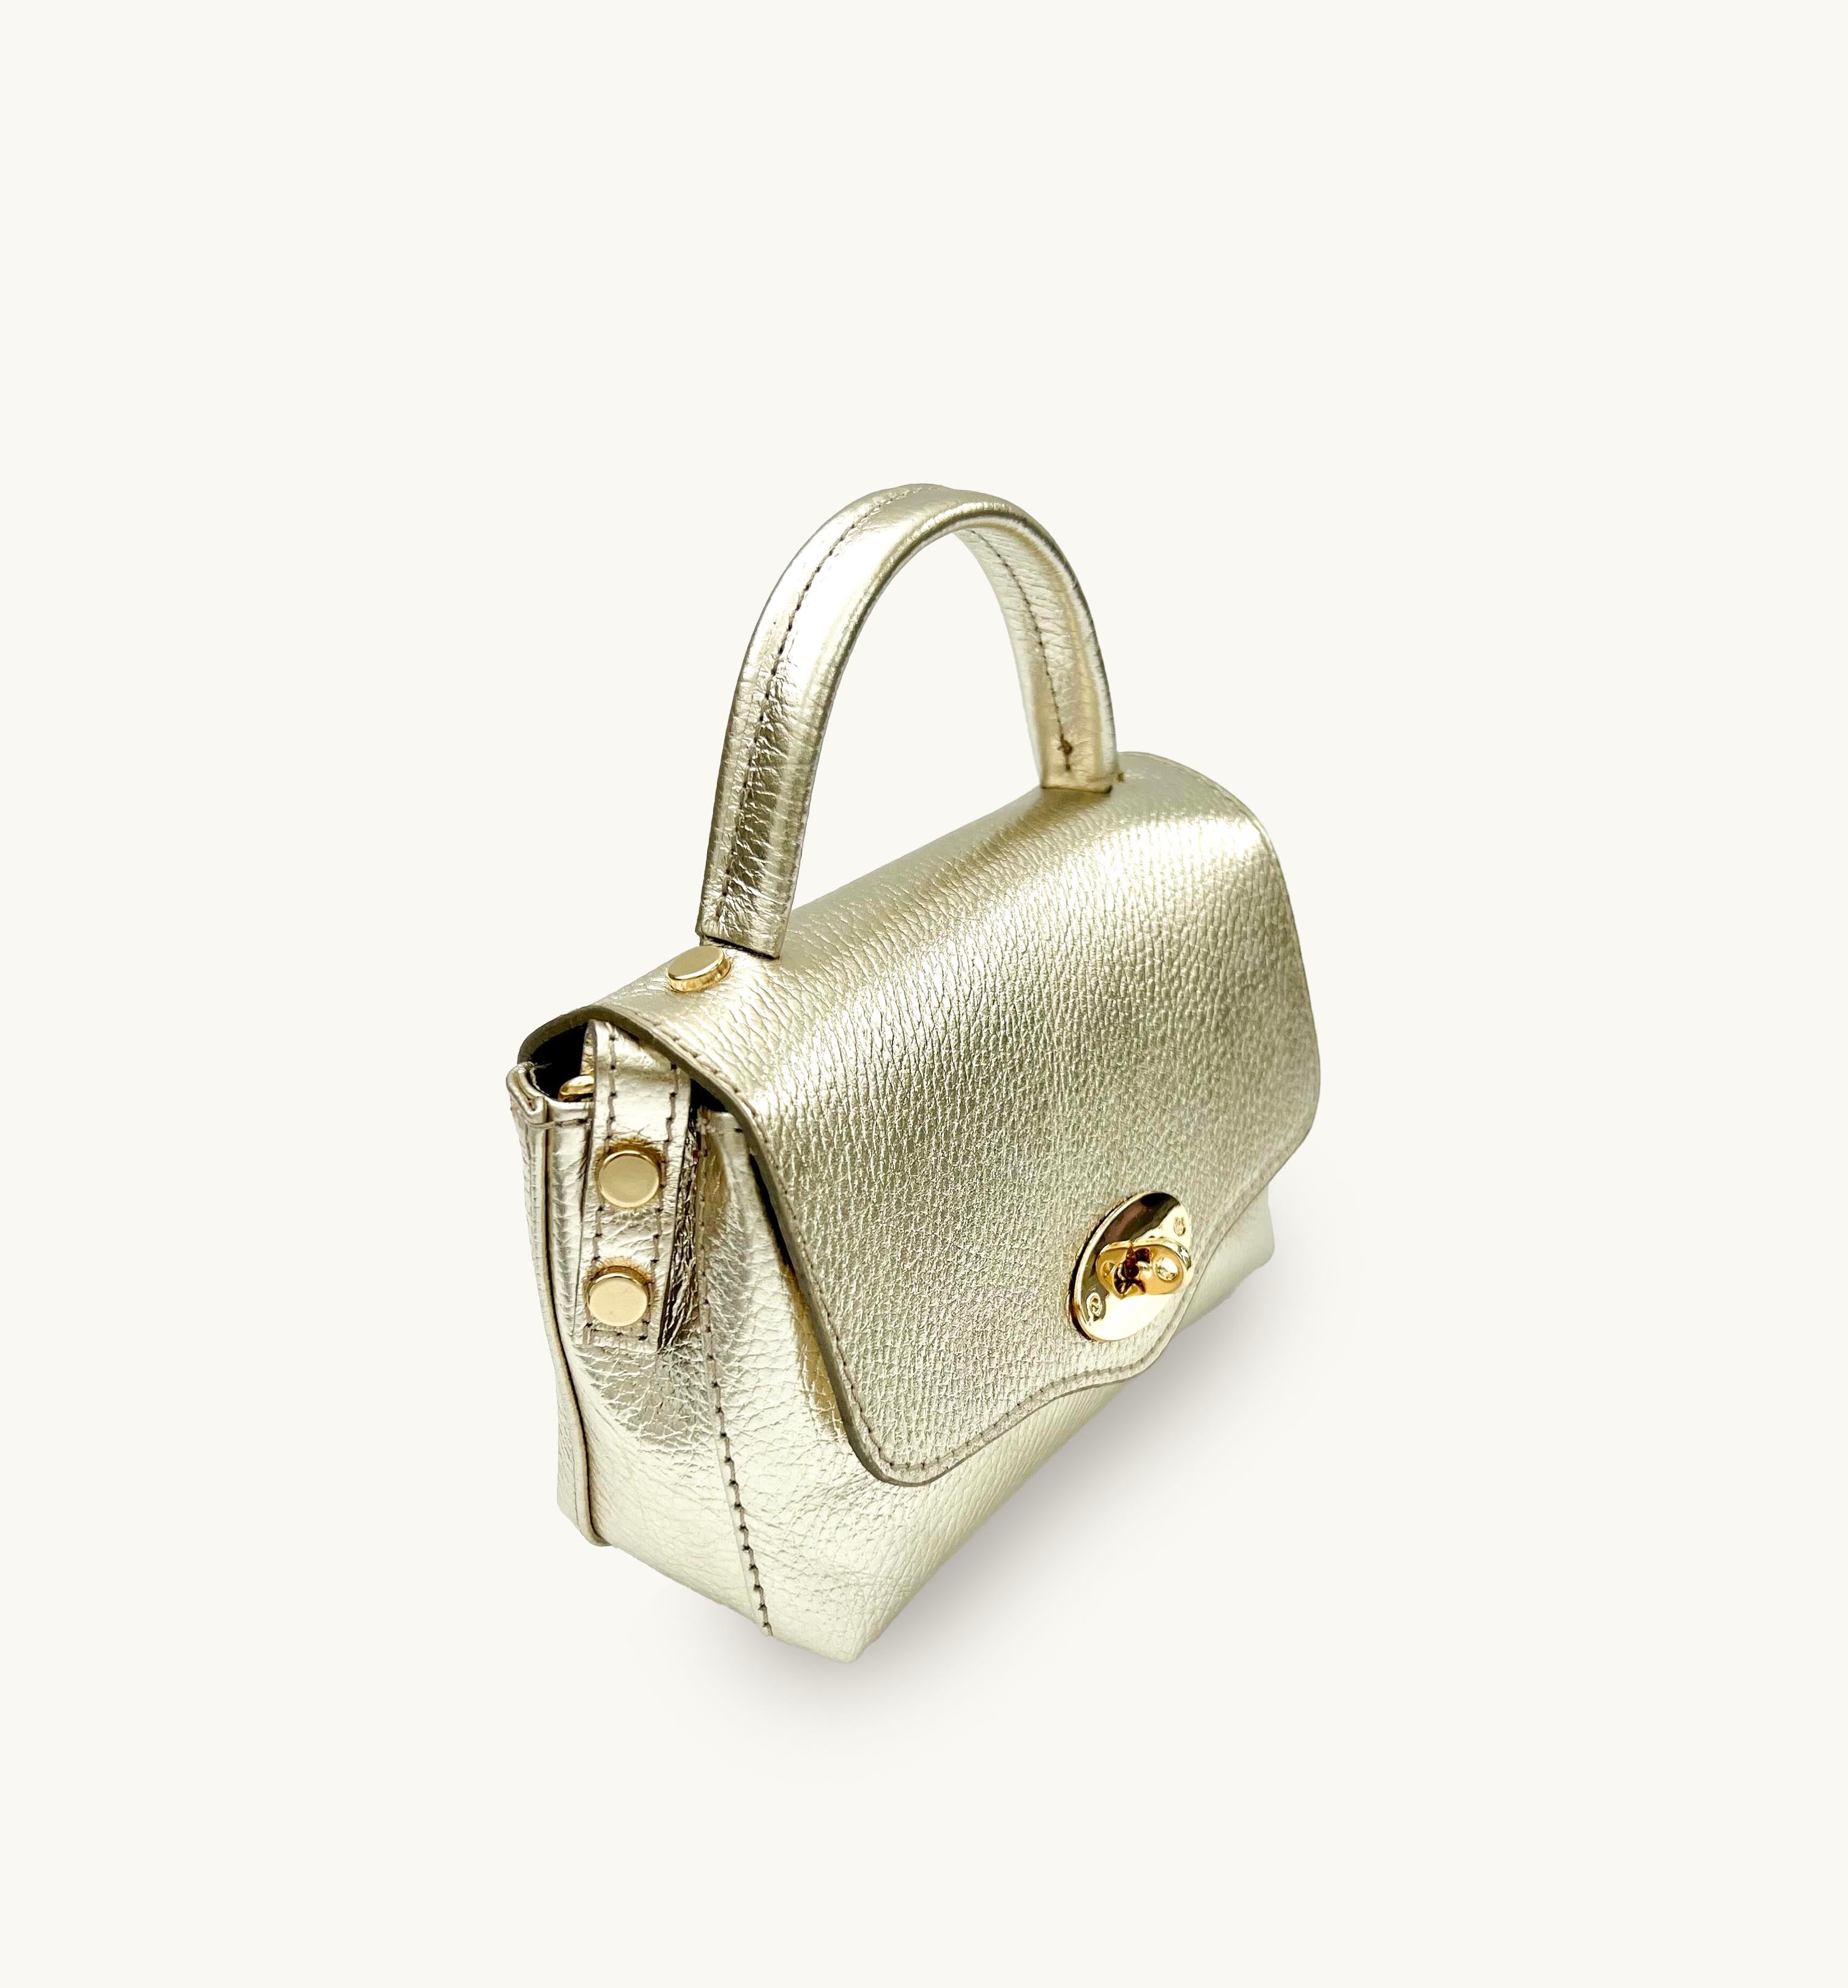 The Rachel Gold Leather Bag